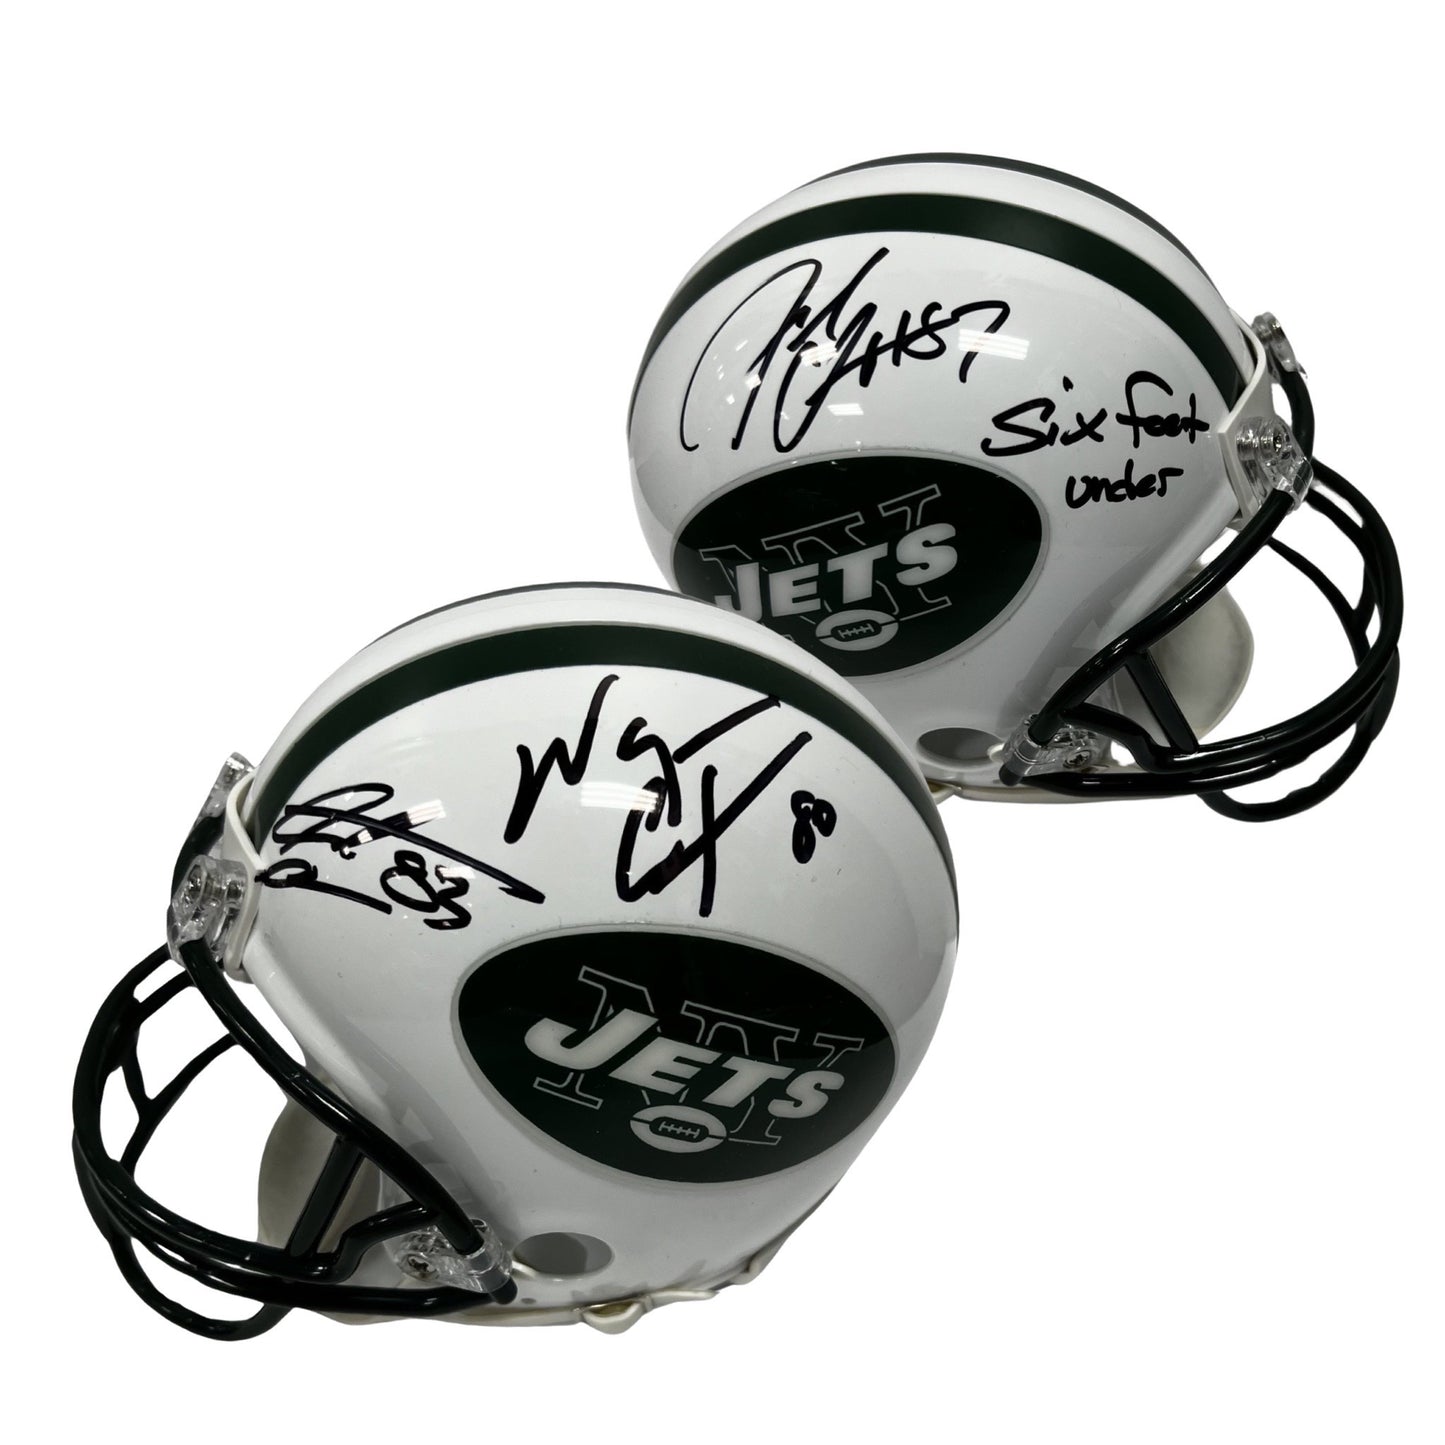 Santana Moss, Wayne Chrebet & Laveranues Coles Autographed New York Jets Speed Mini Helmet "Six Feet Under" Inscription Steiner CX